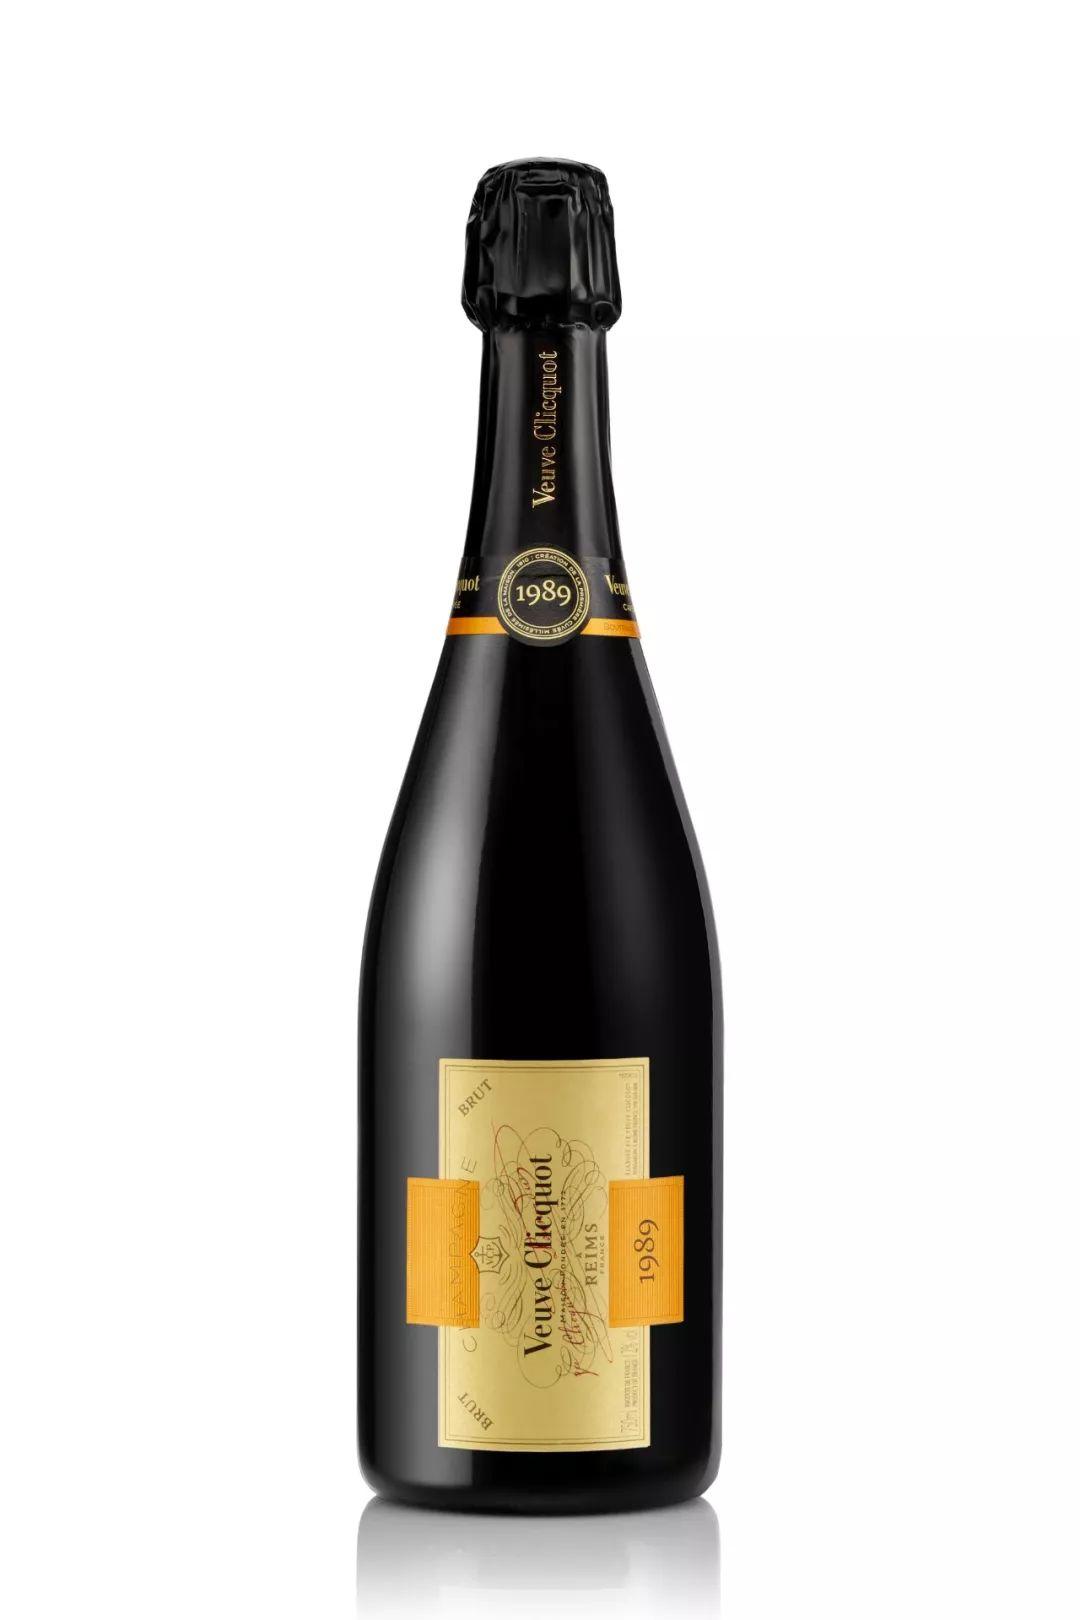 2019 展商介绍 | 凯歌香槟 Champagne Veuve Clicquot